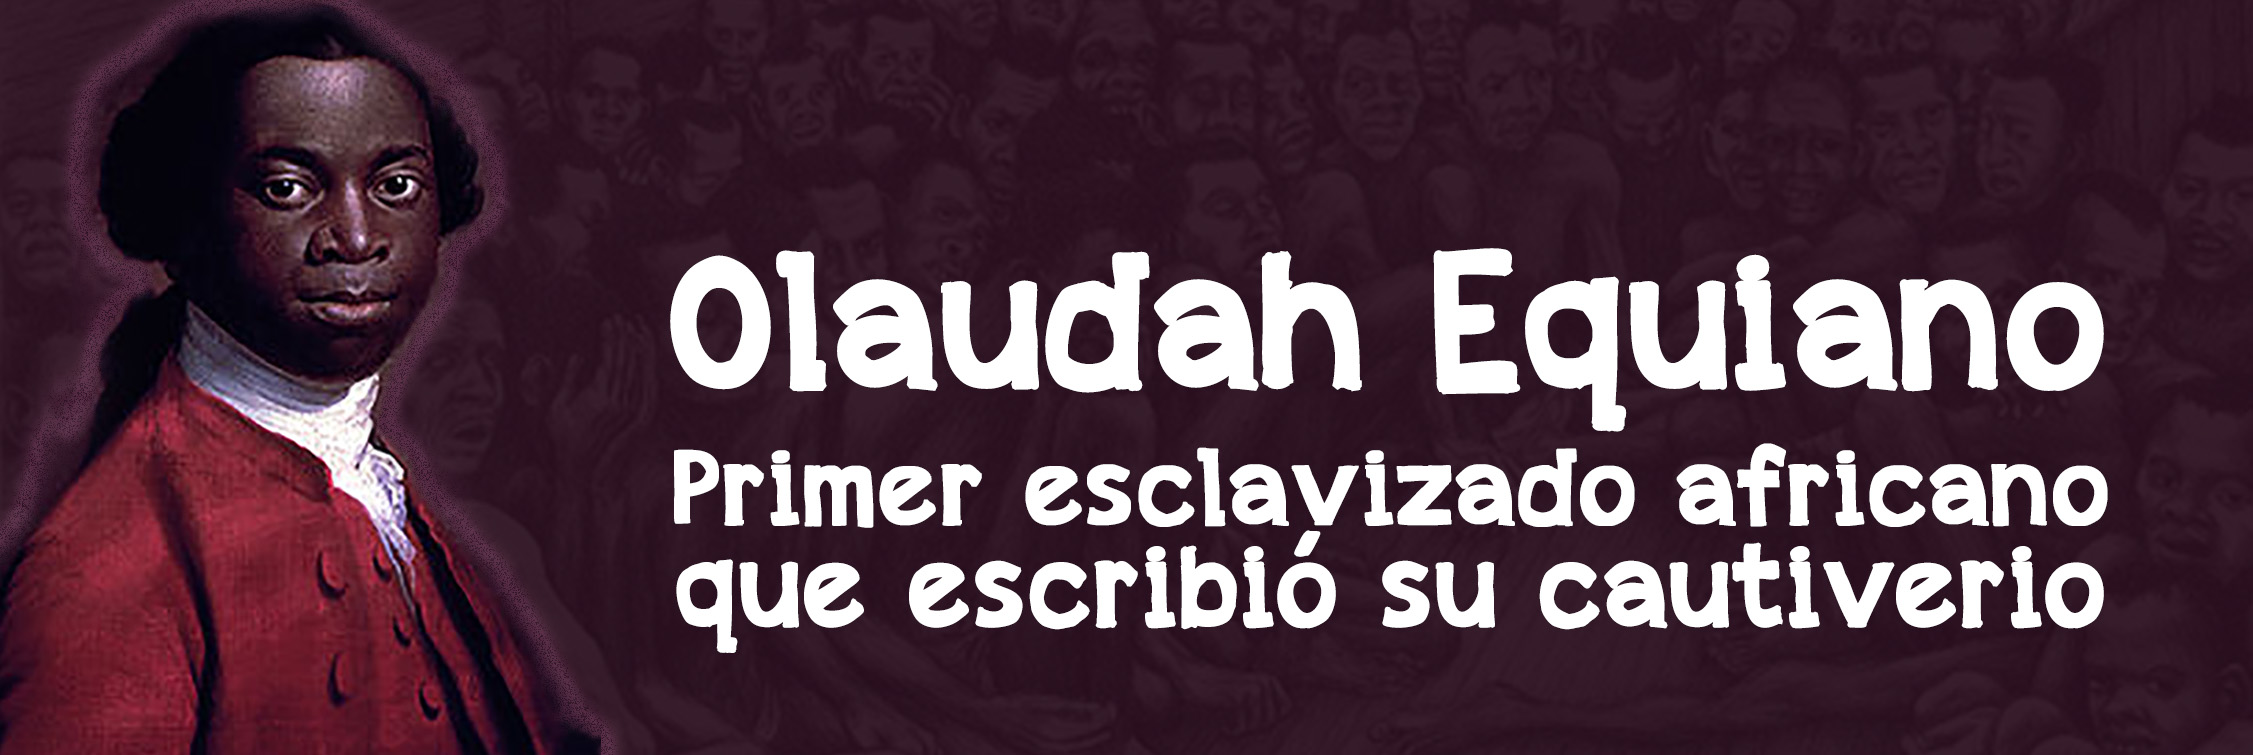 Olaudah Equiano: primer esclavizado africano que escribió su cautiverio